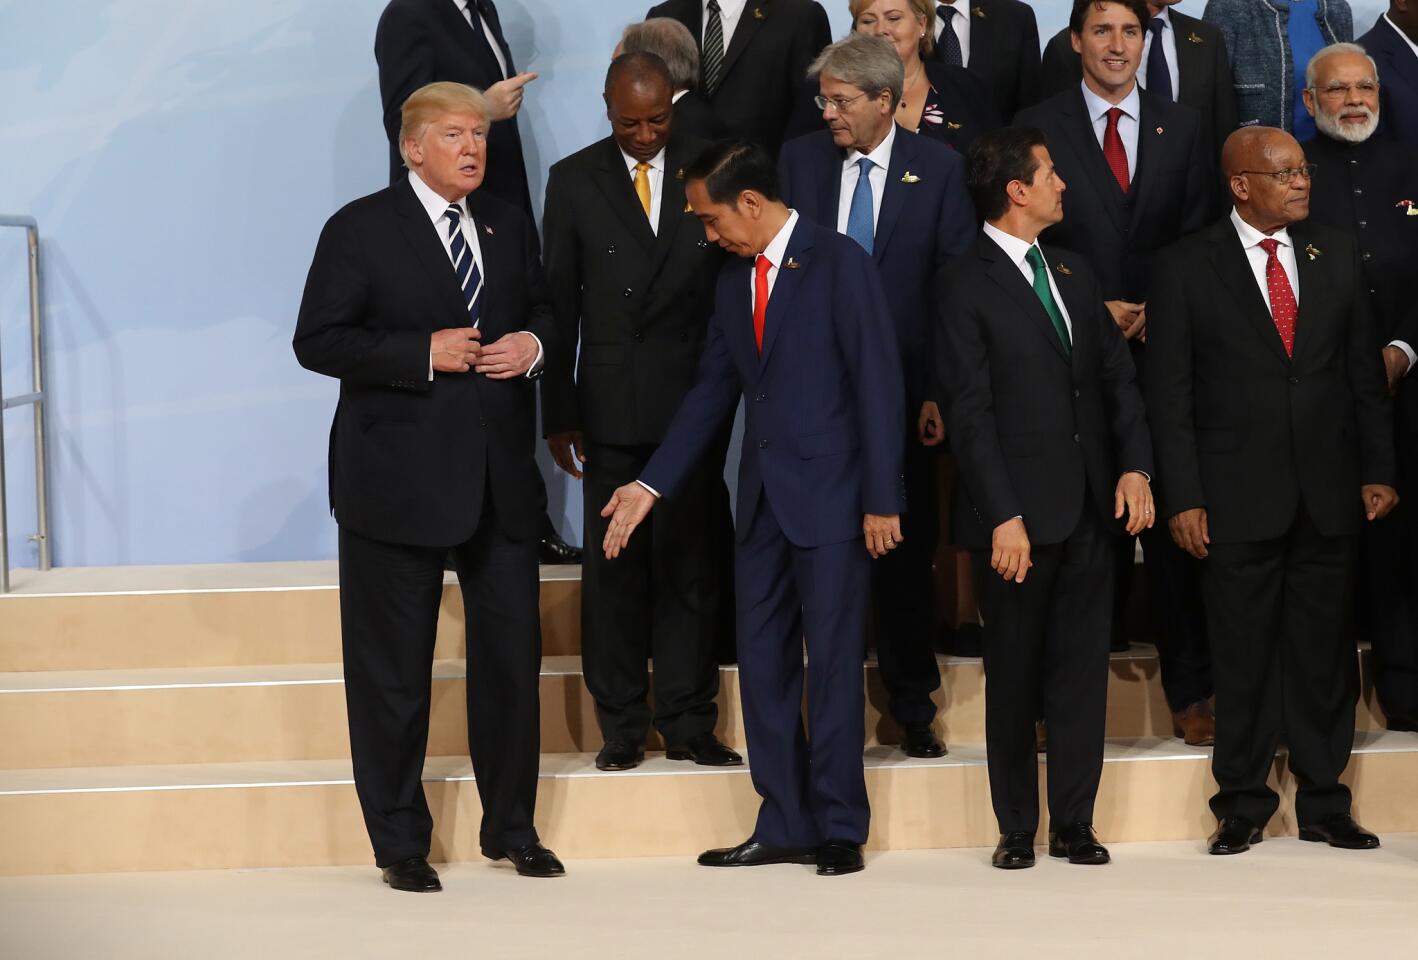 Trump at the G20 summit